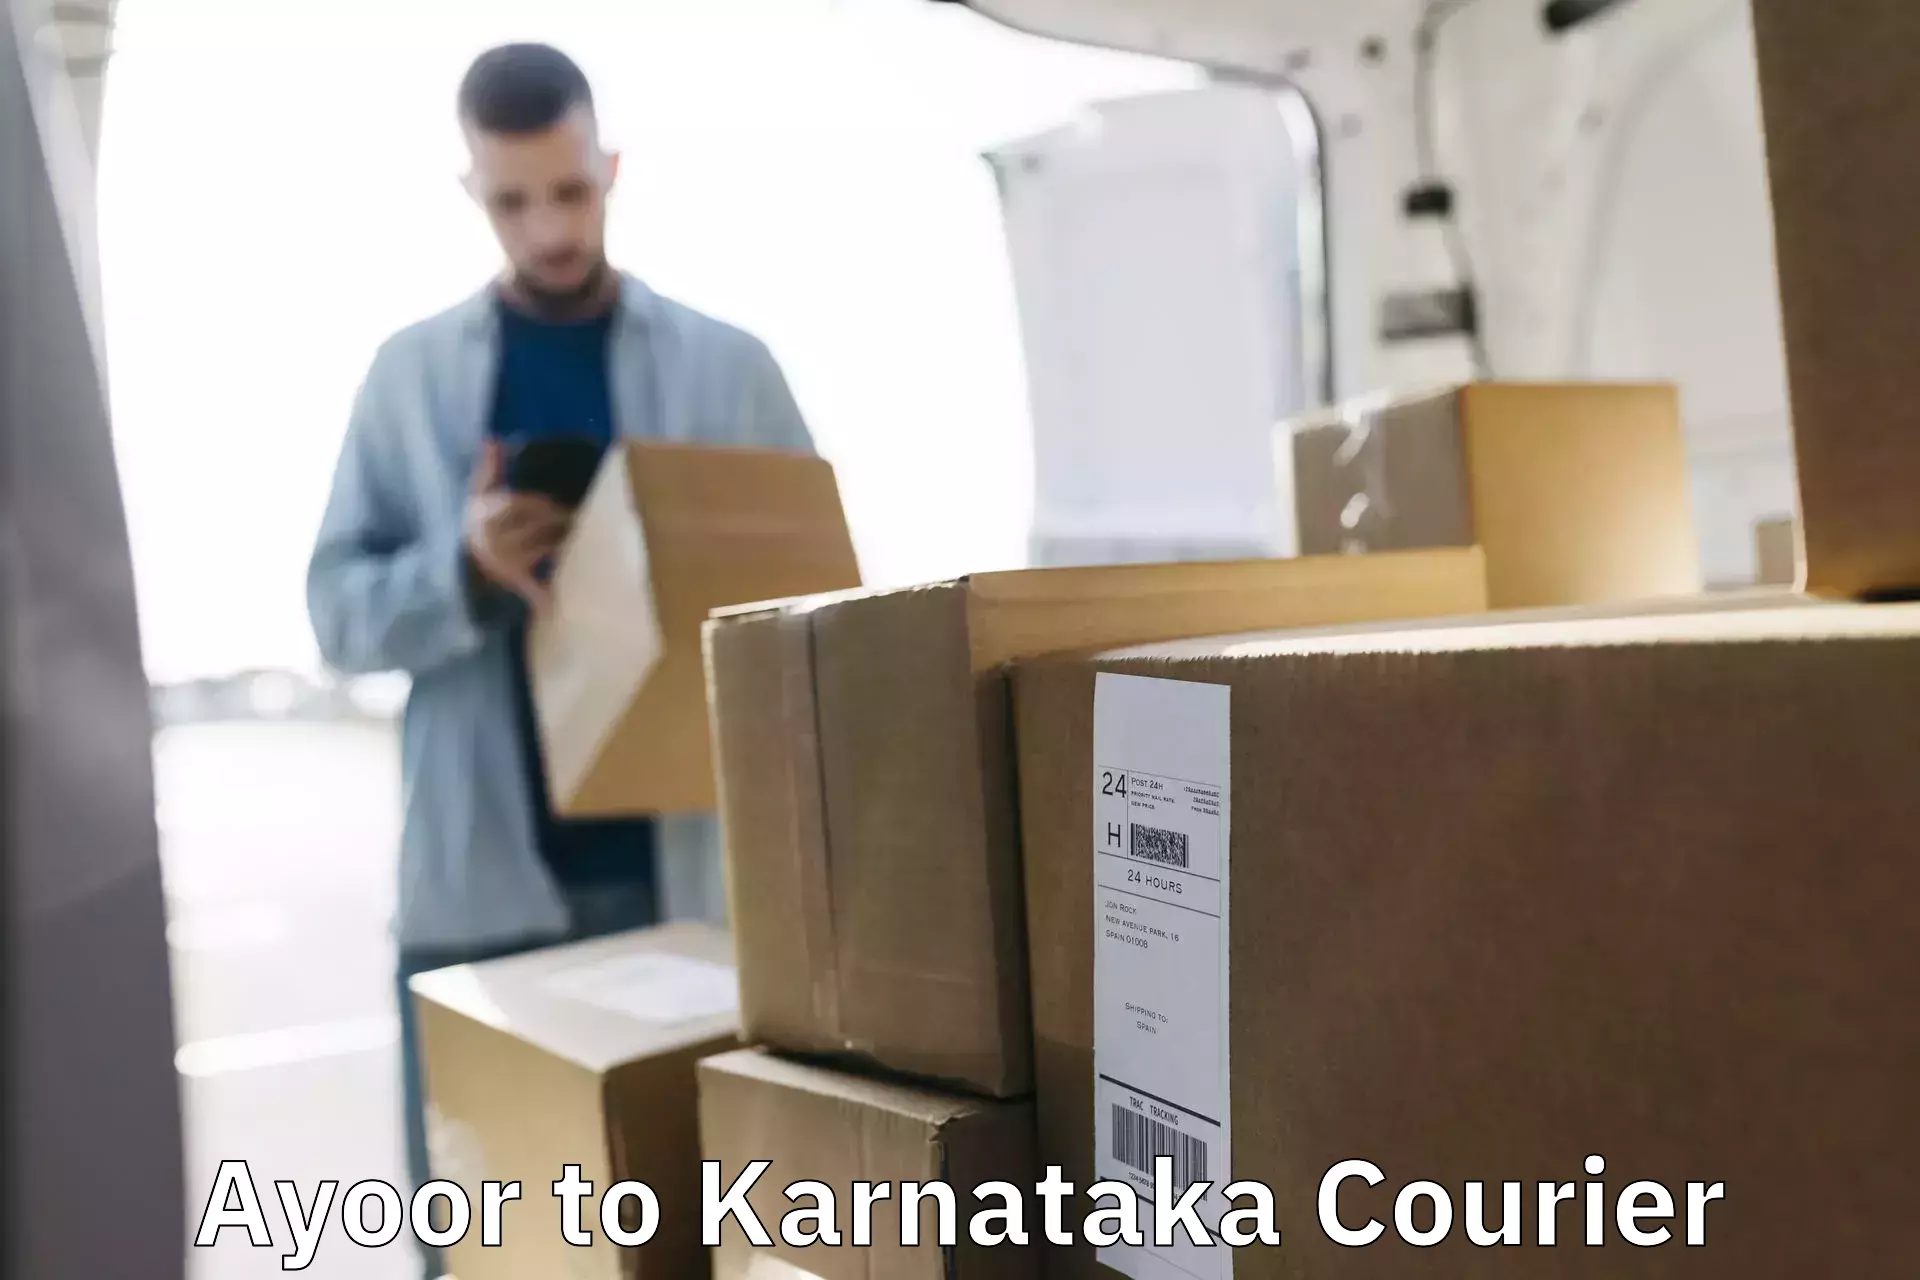 Express delivery capabilities Ayoor to Karnataka